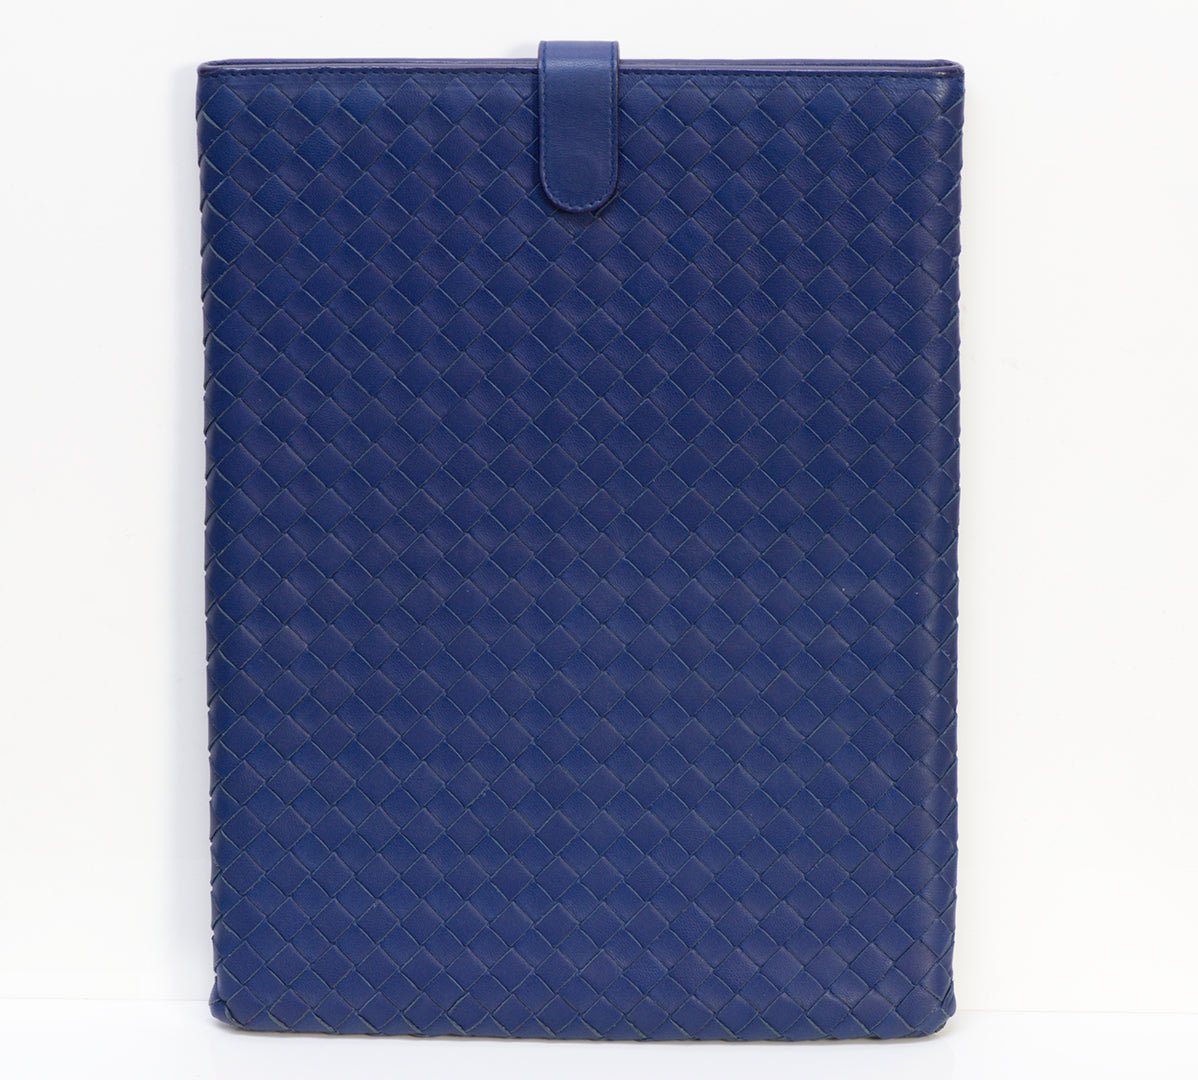 Bottega Veneta Blue Intrecciato Leather iPad Case - DSF Antique Jewelry